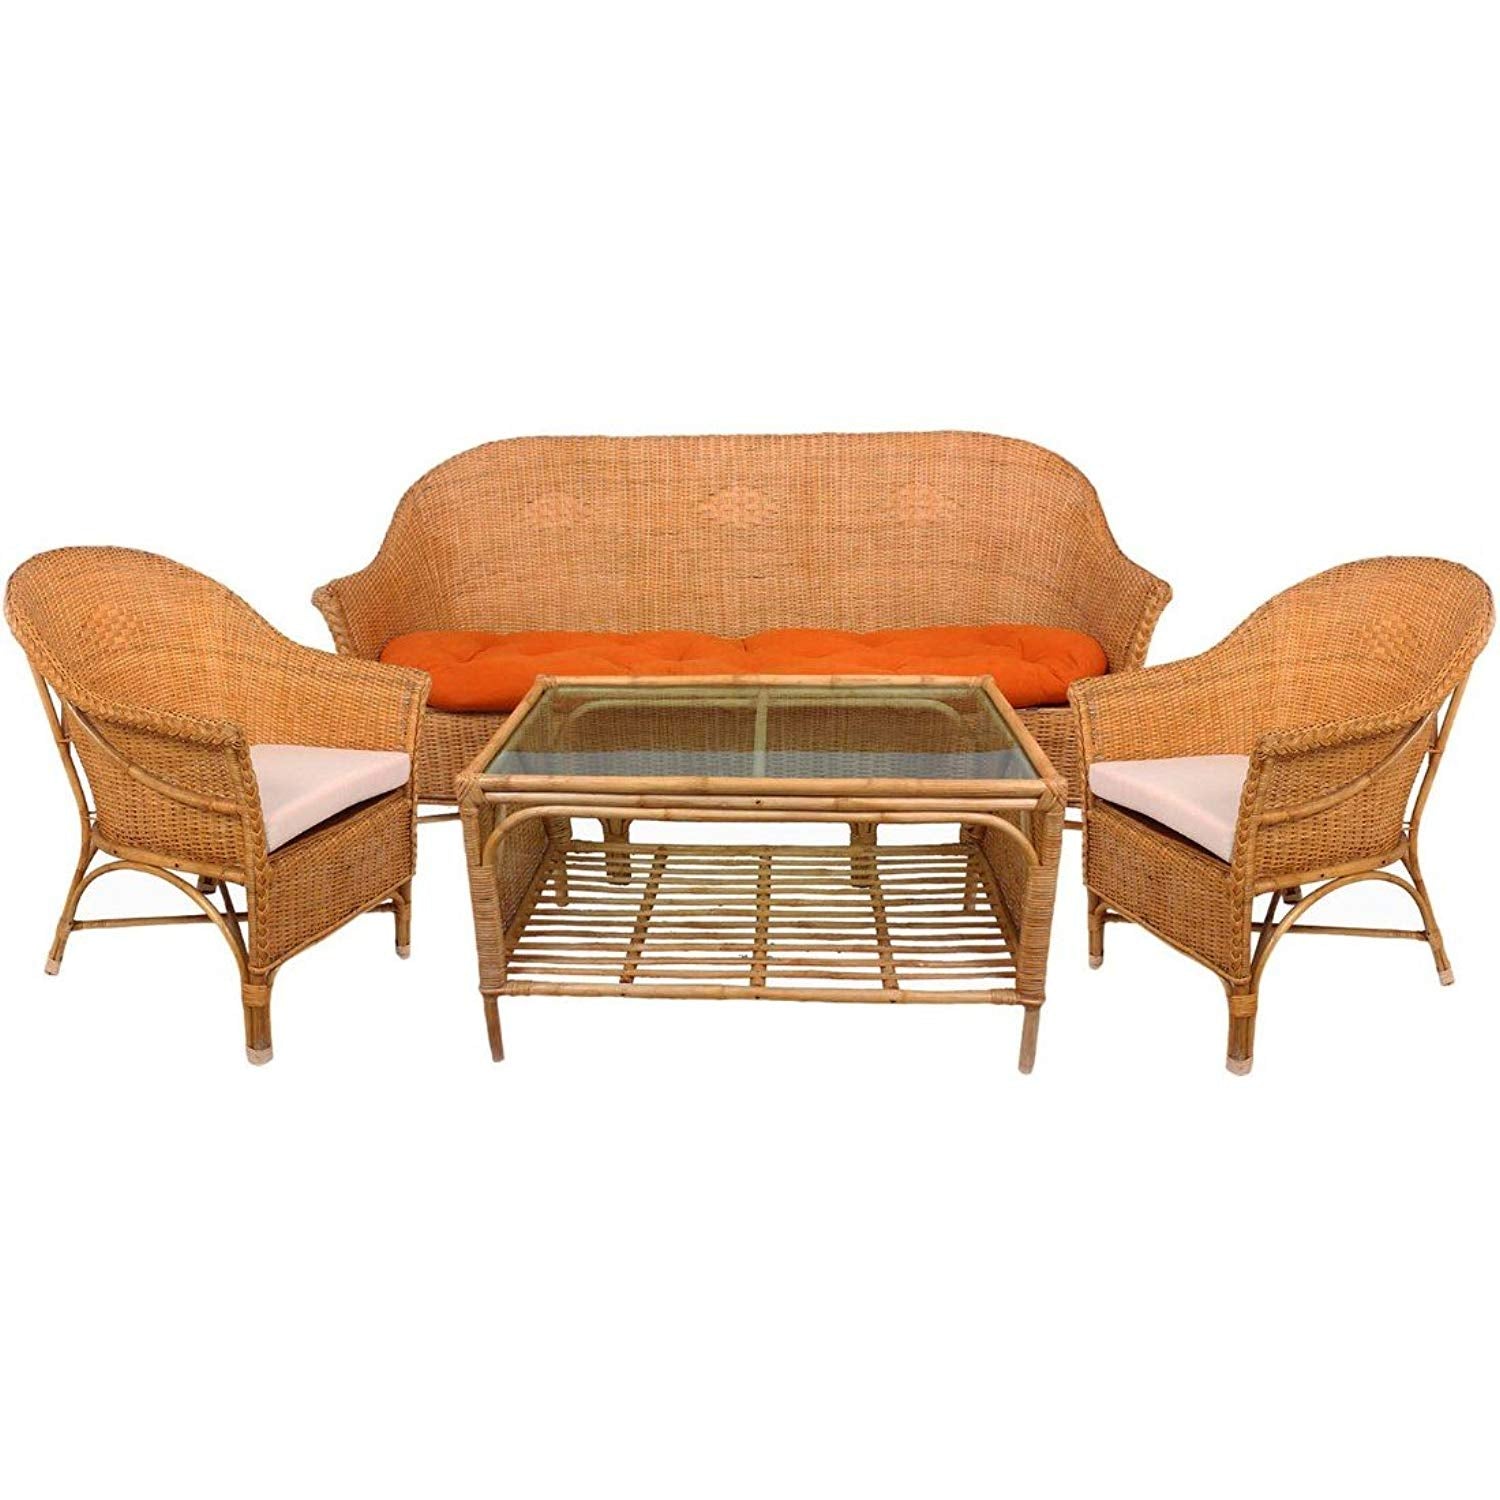 IRA Cane Locker Sofa Set with Centre Table (Natural Beige, Standard Size) - IRA Furniture